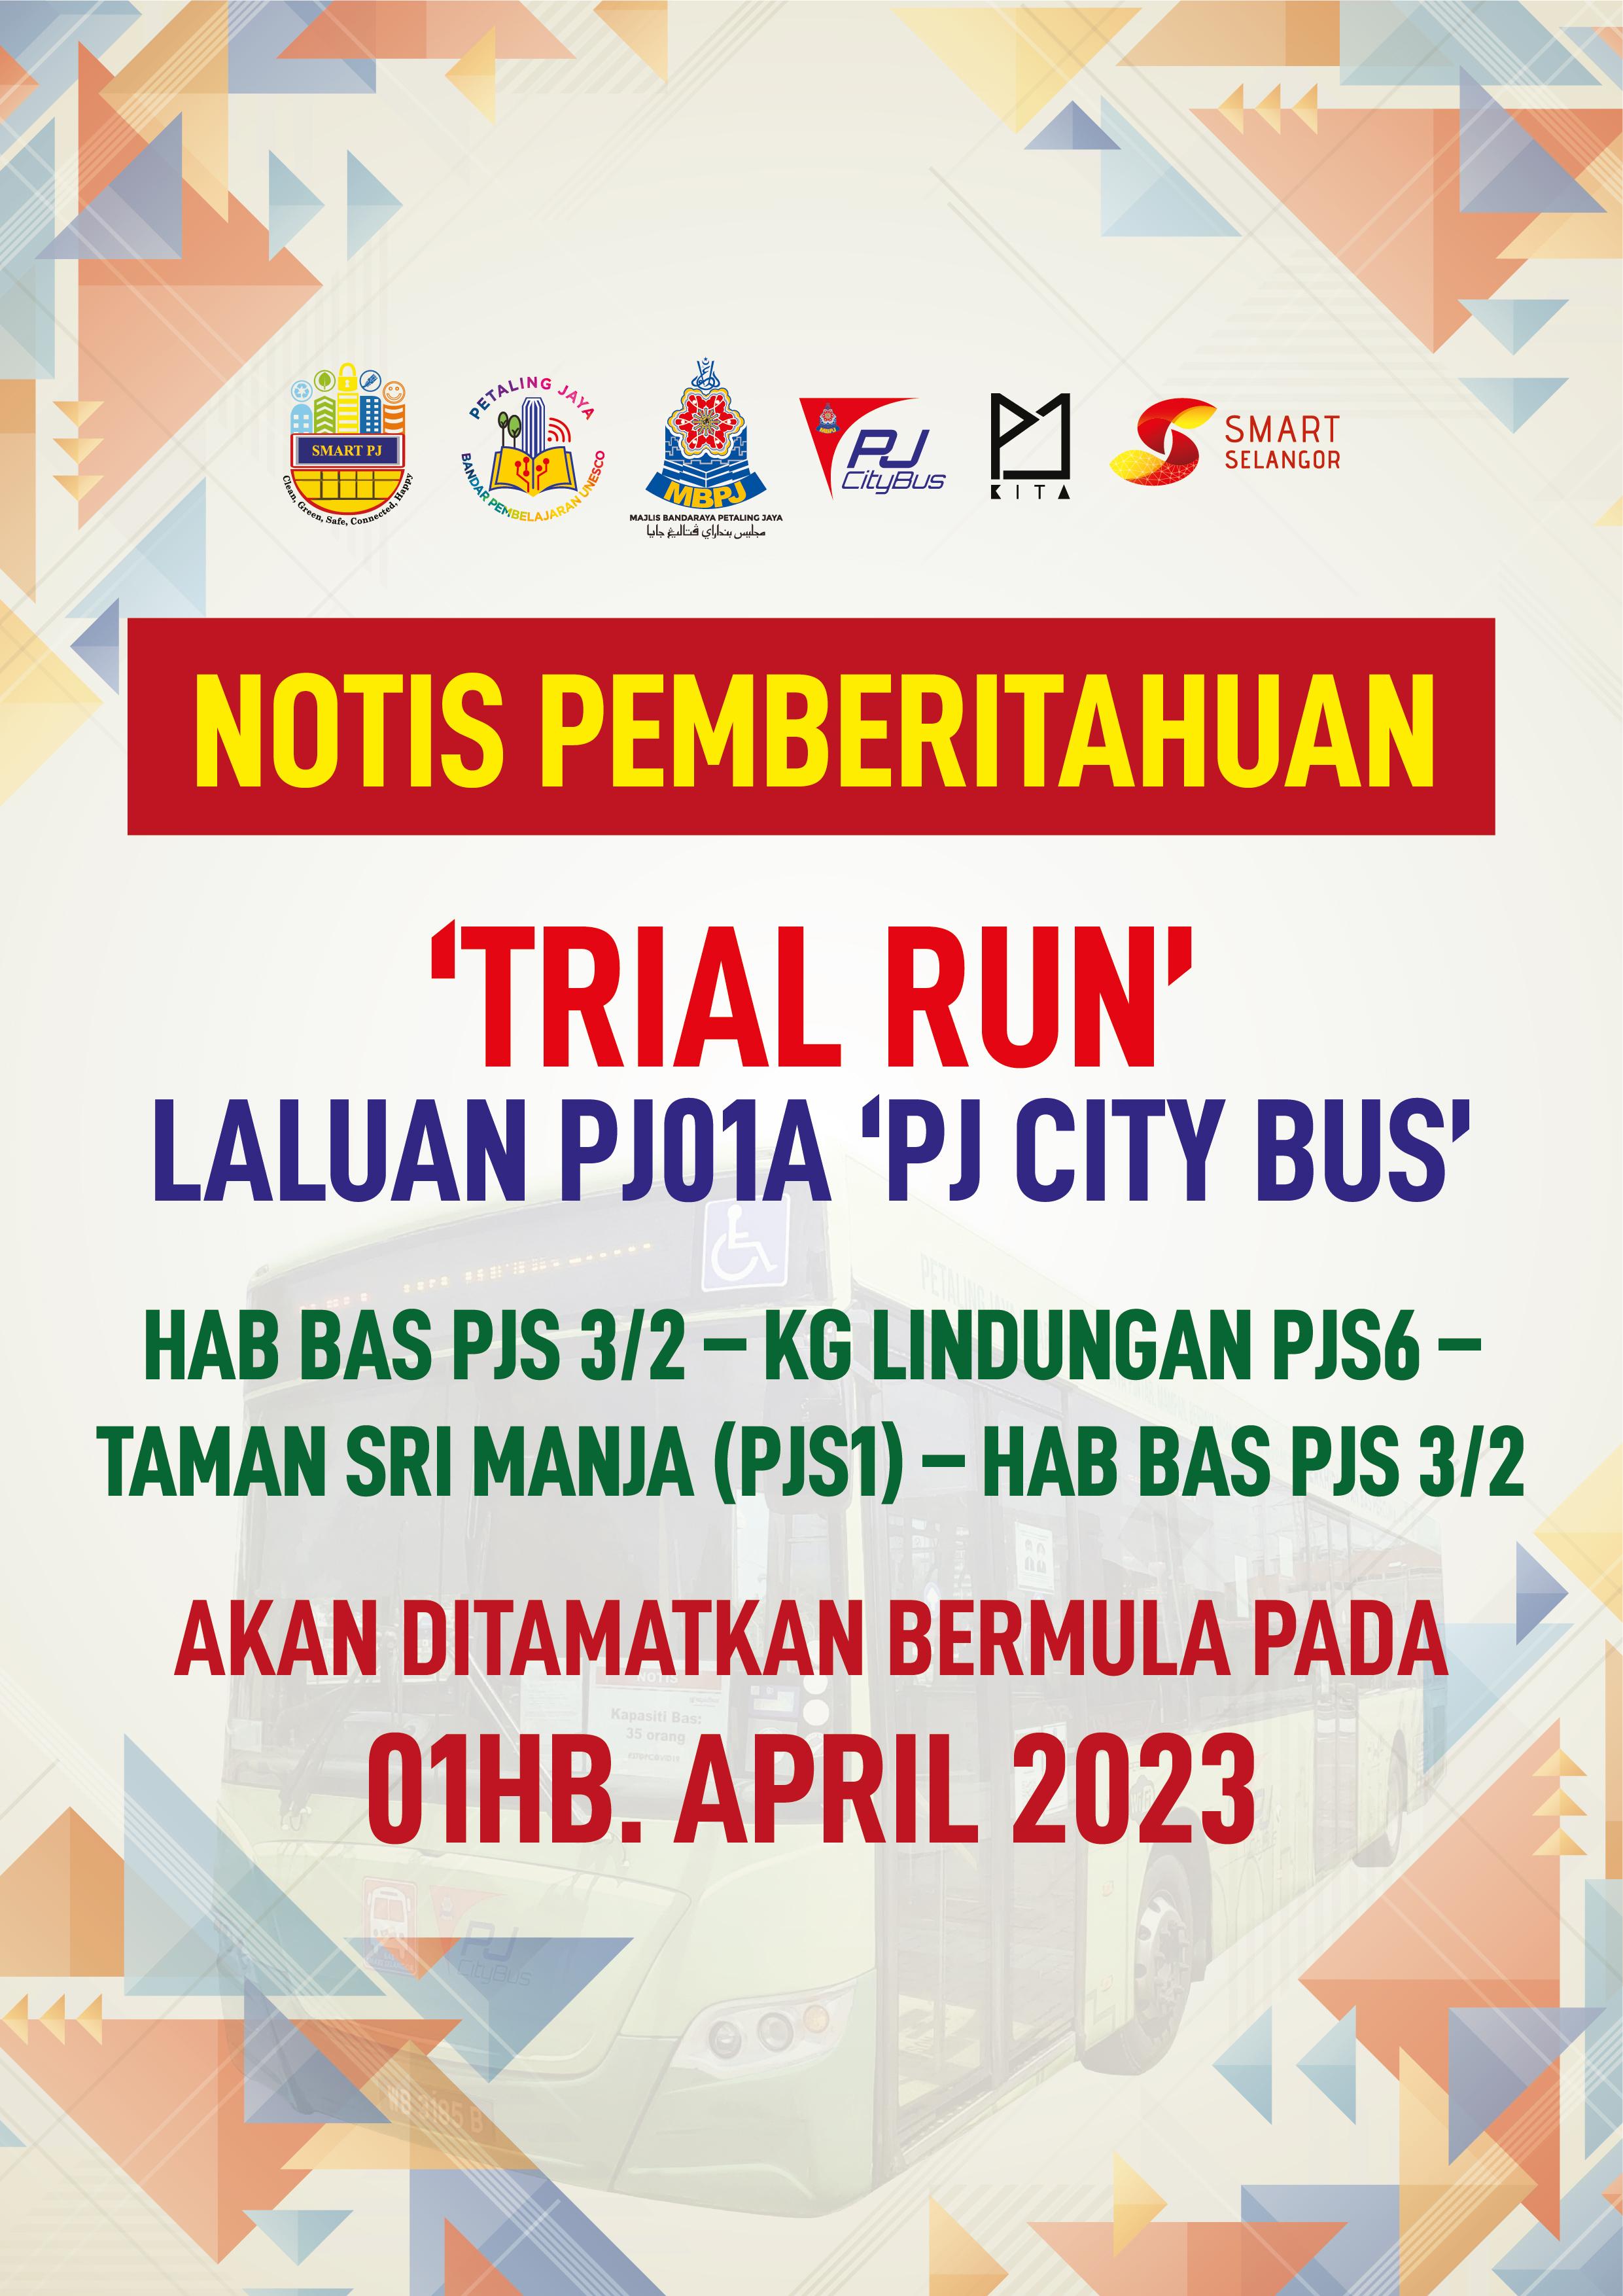 PJ City Bus Trial Run